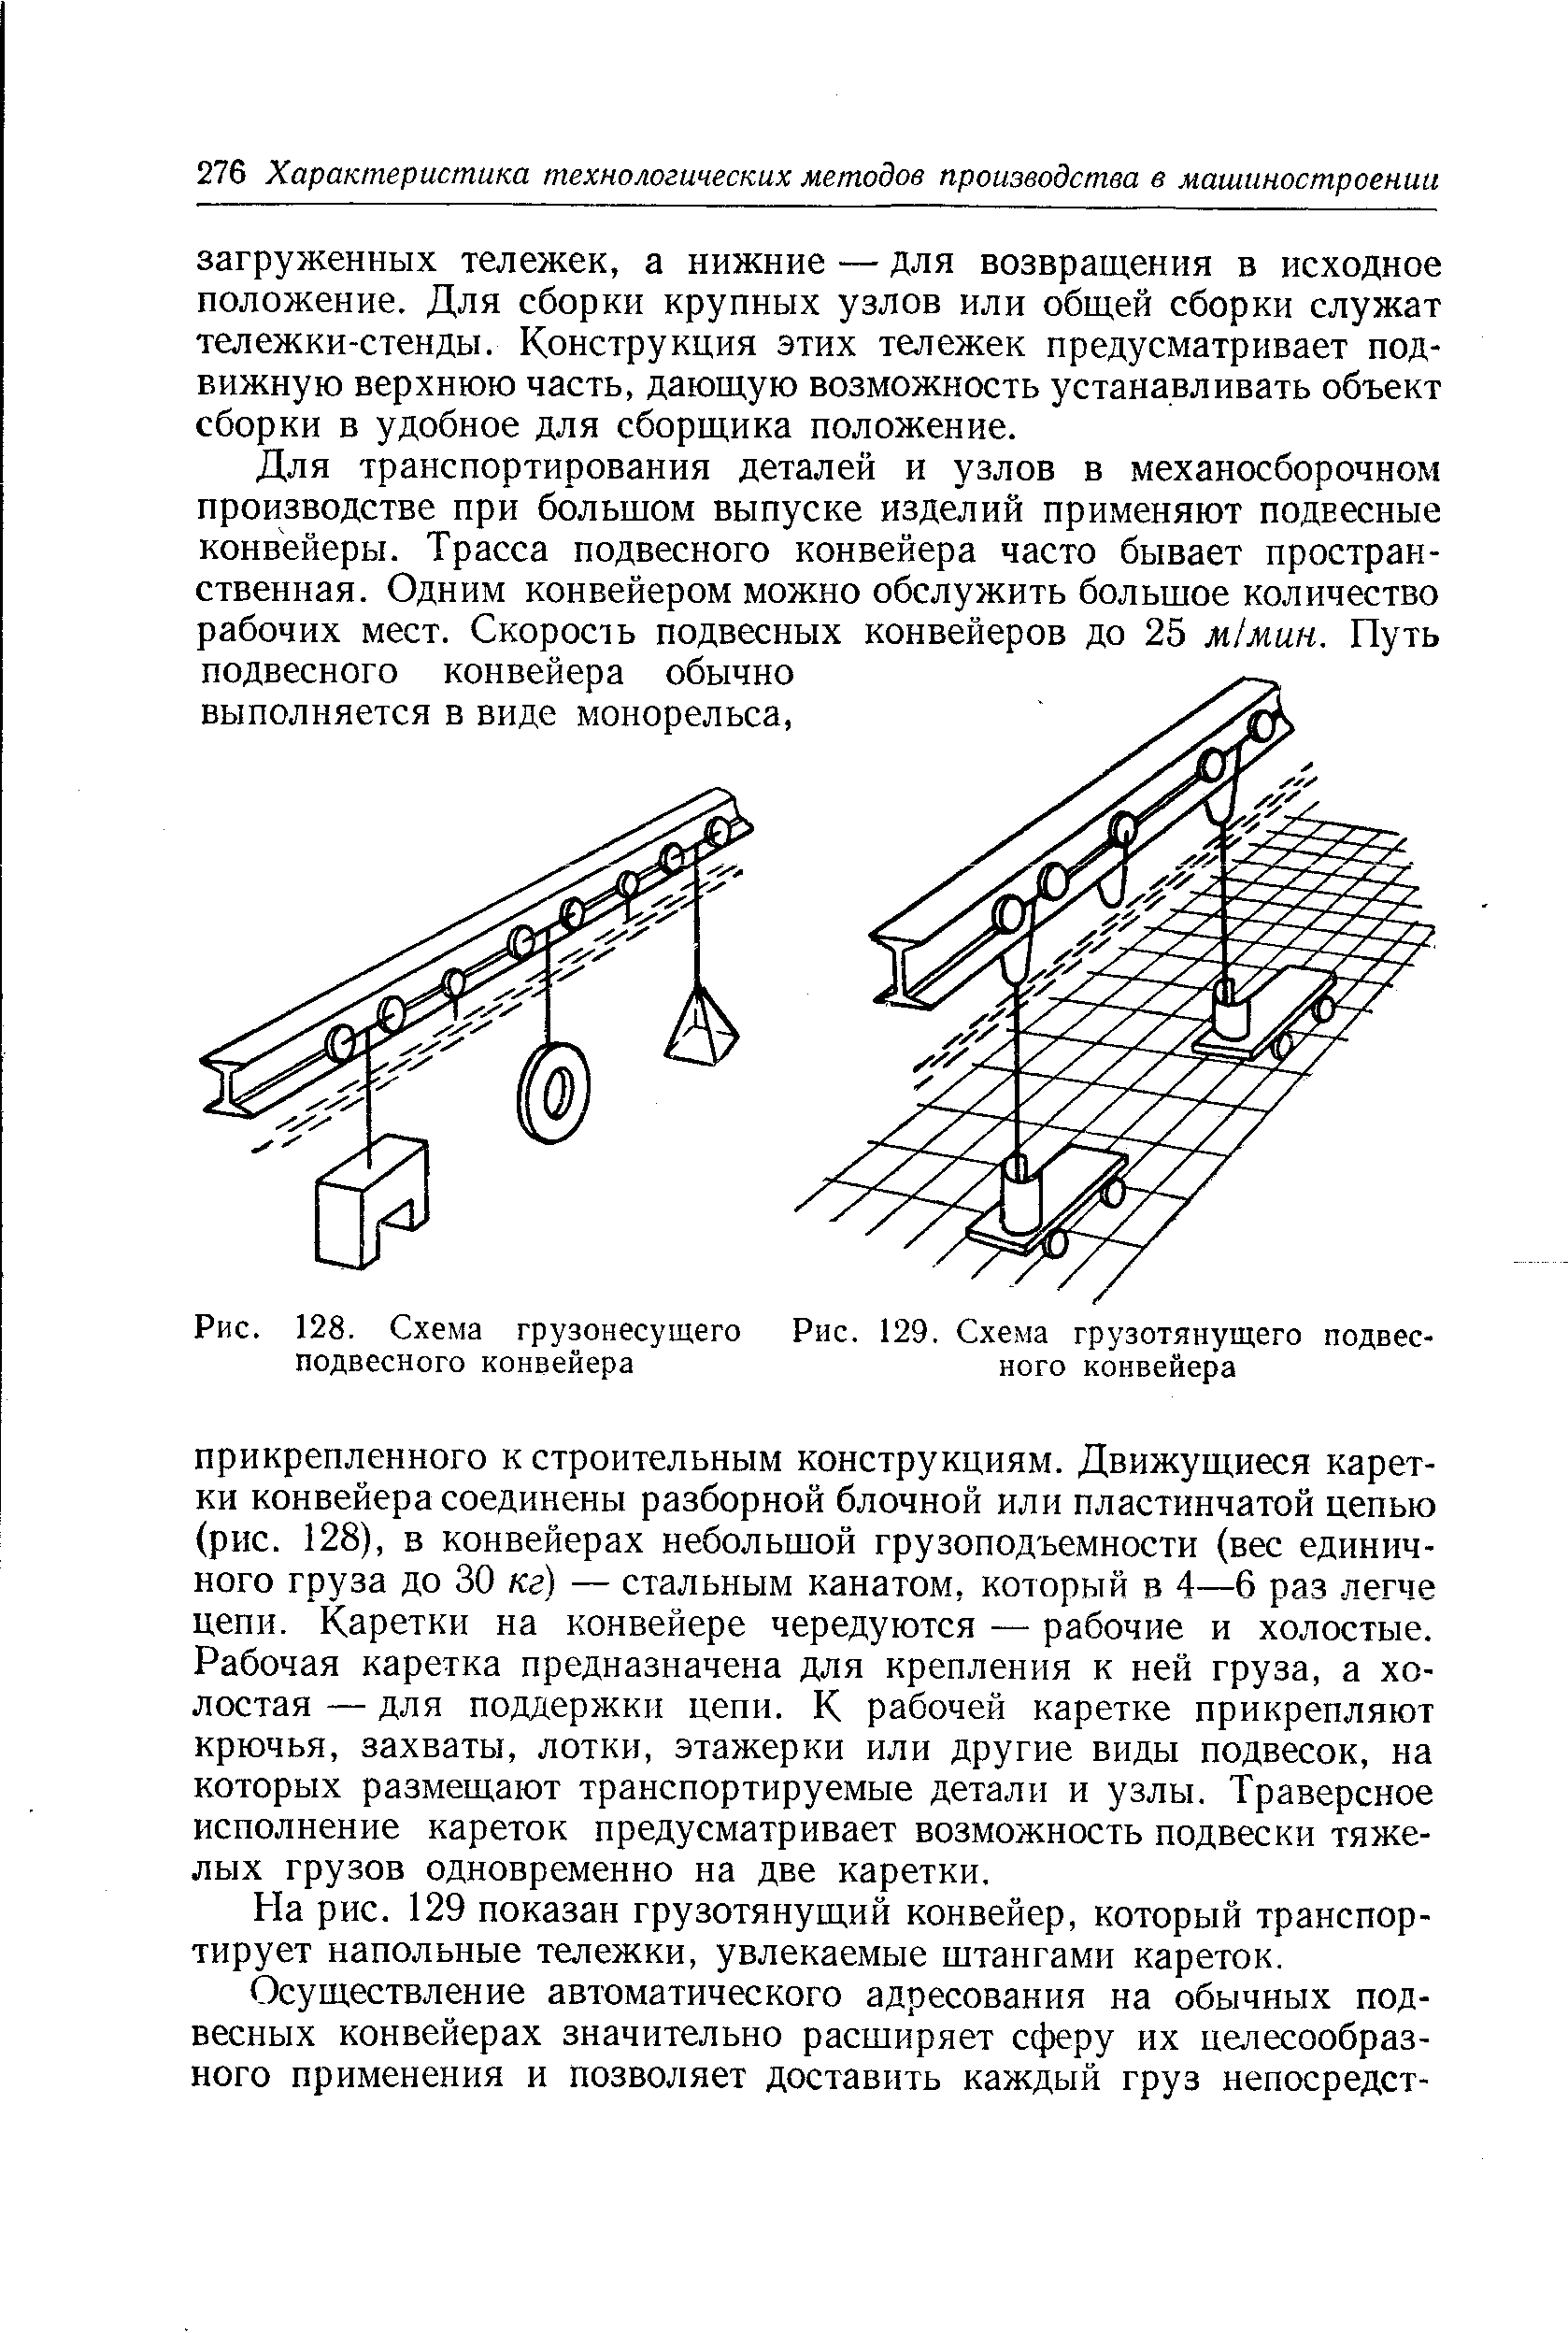 Рис. 129. Схема грузотянущего подвесного конвейера
